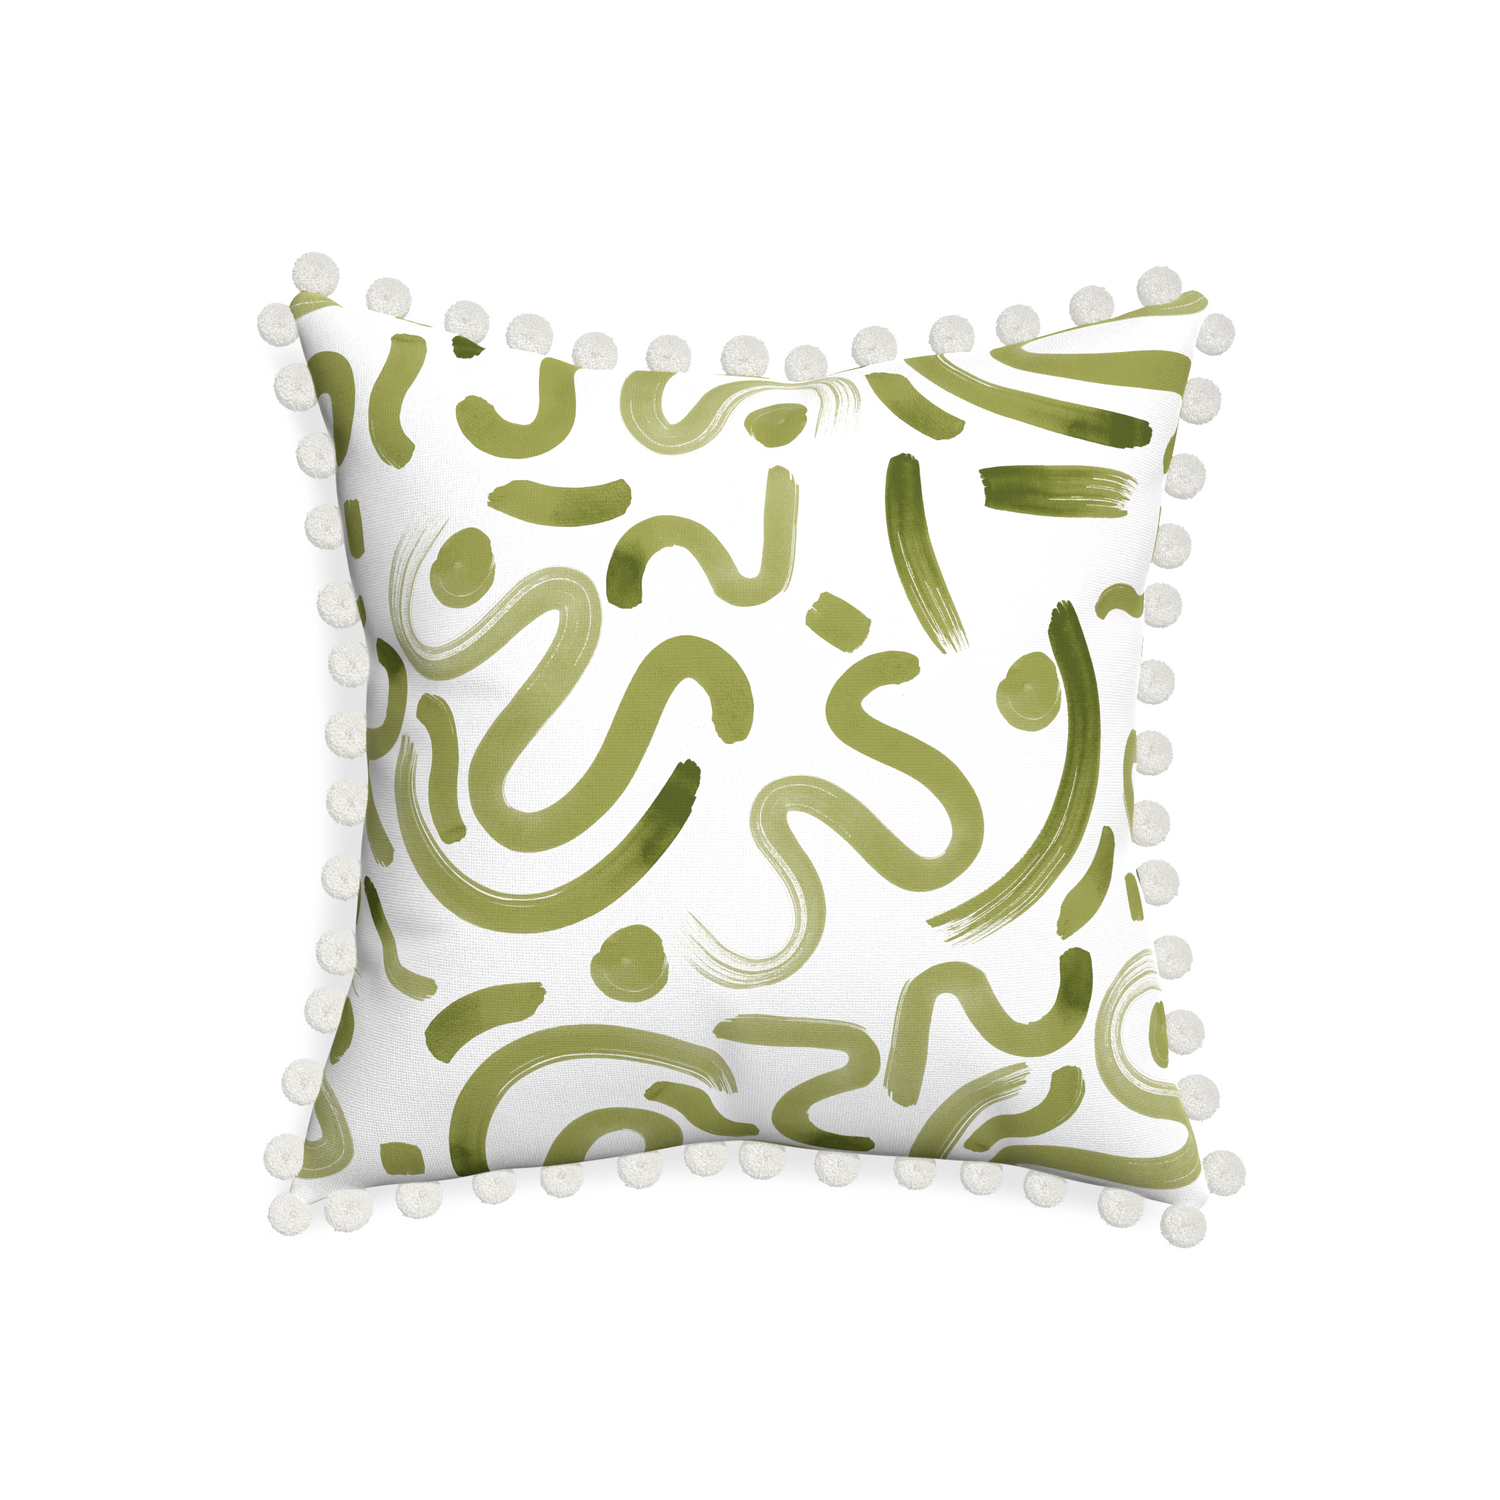 20-square hockney moss custom pillow with snow pom pom on white background